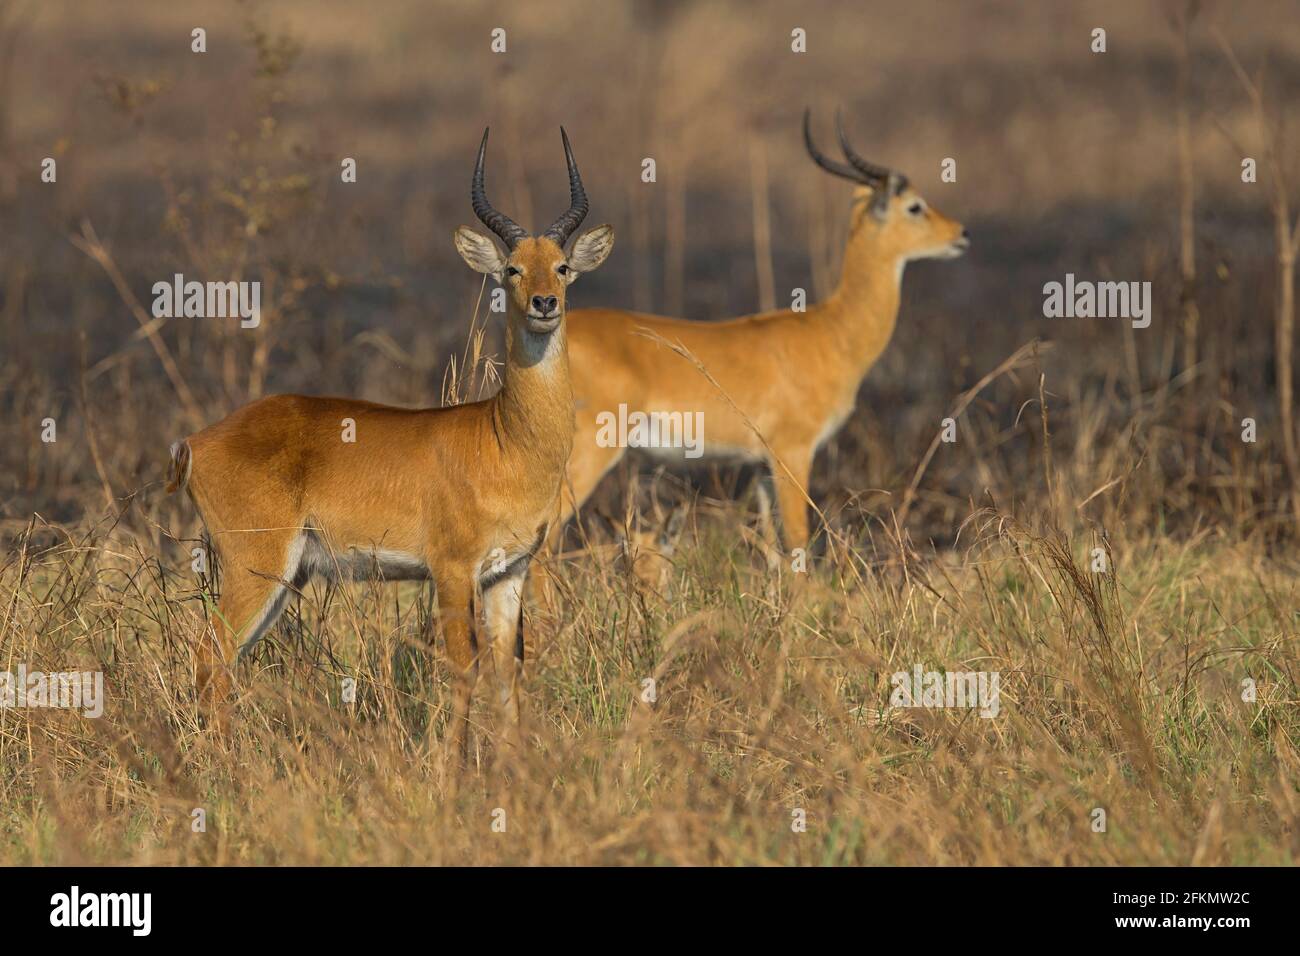 Dos kob ugandeses en la pradera de la Reserva de Vida Silvestre Semuliki Foto de stock